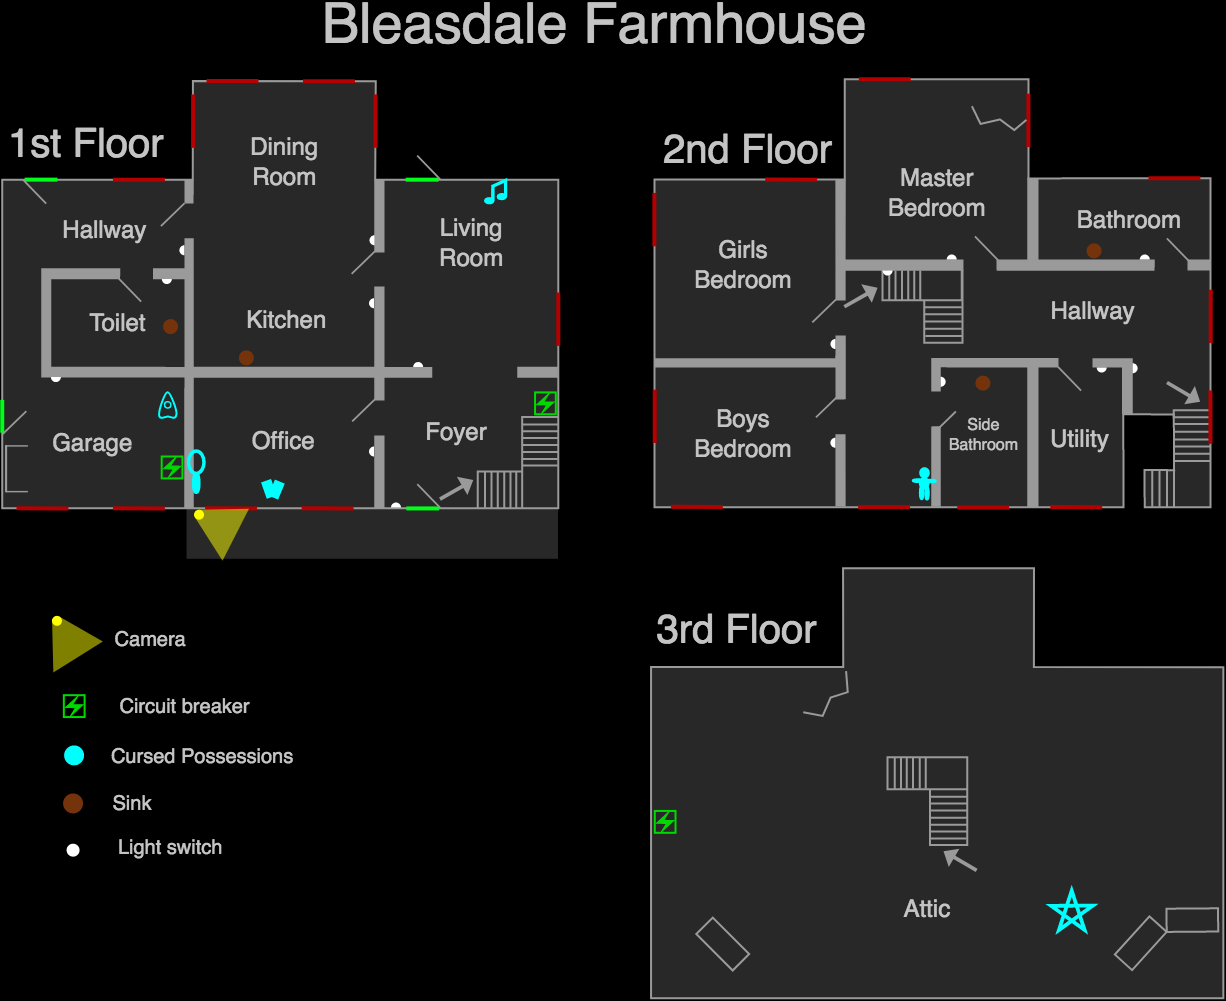 Bleasdale farmhouse phasmophobia проклятые предметы фото 9